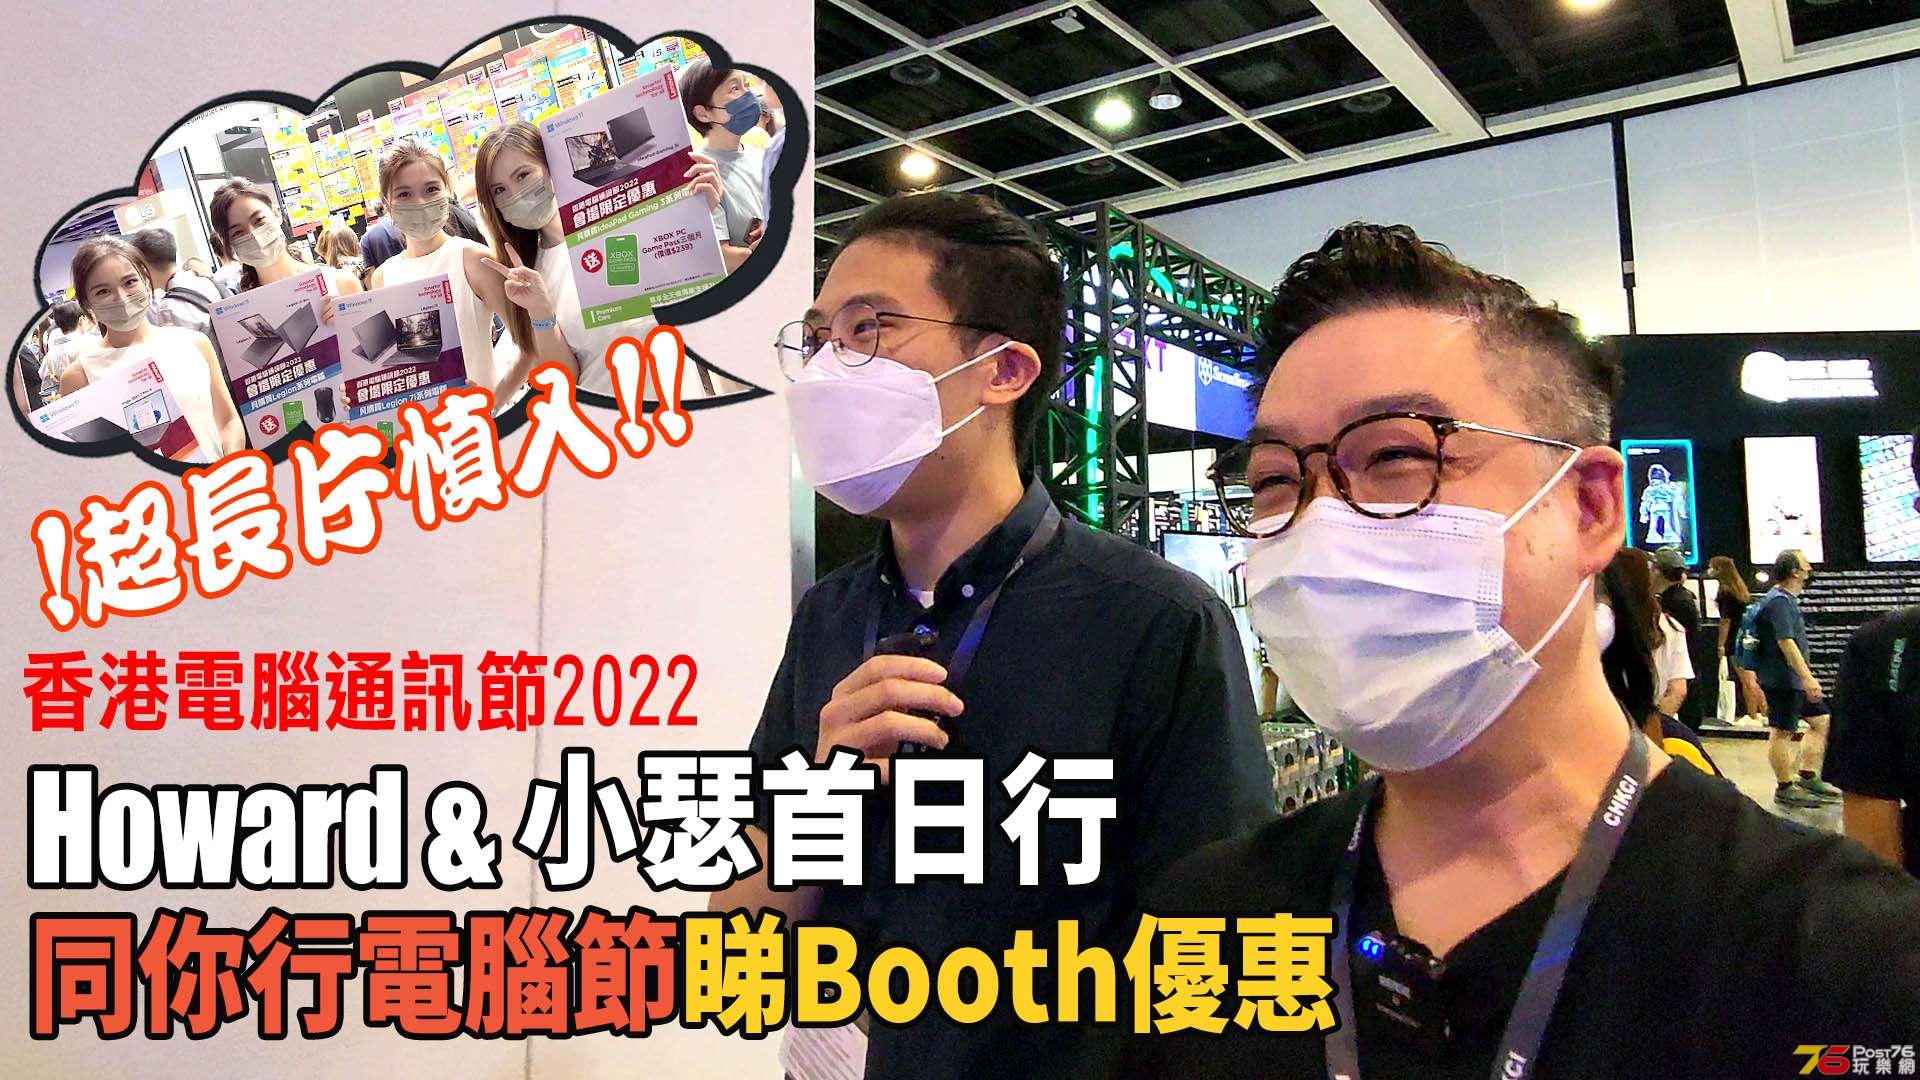 HKCCF-2022-tour forum.jpg